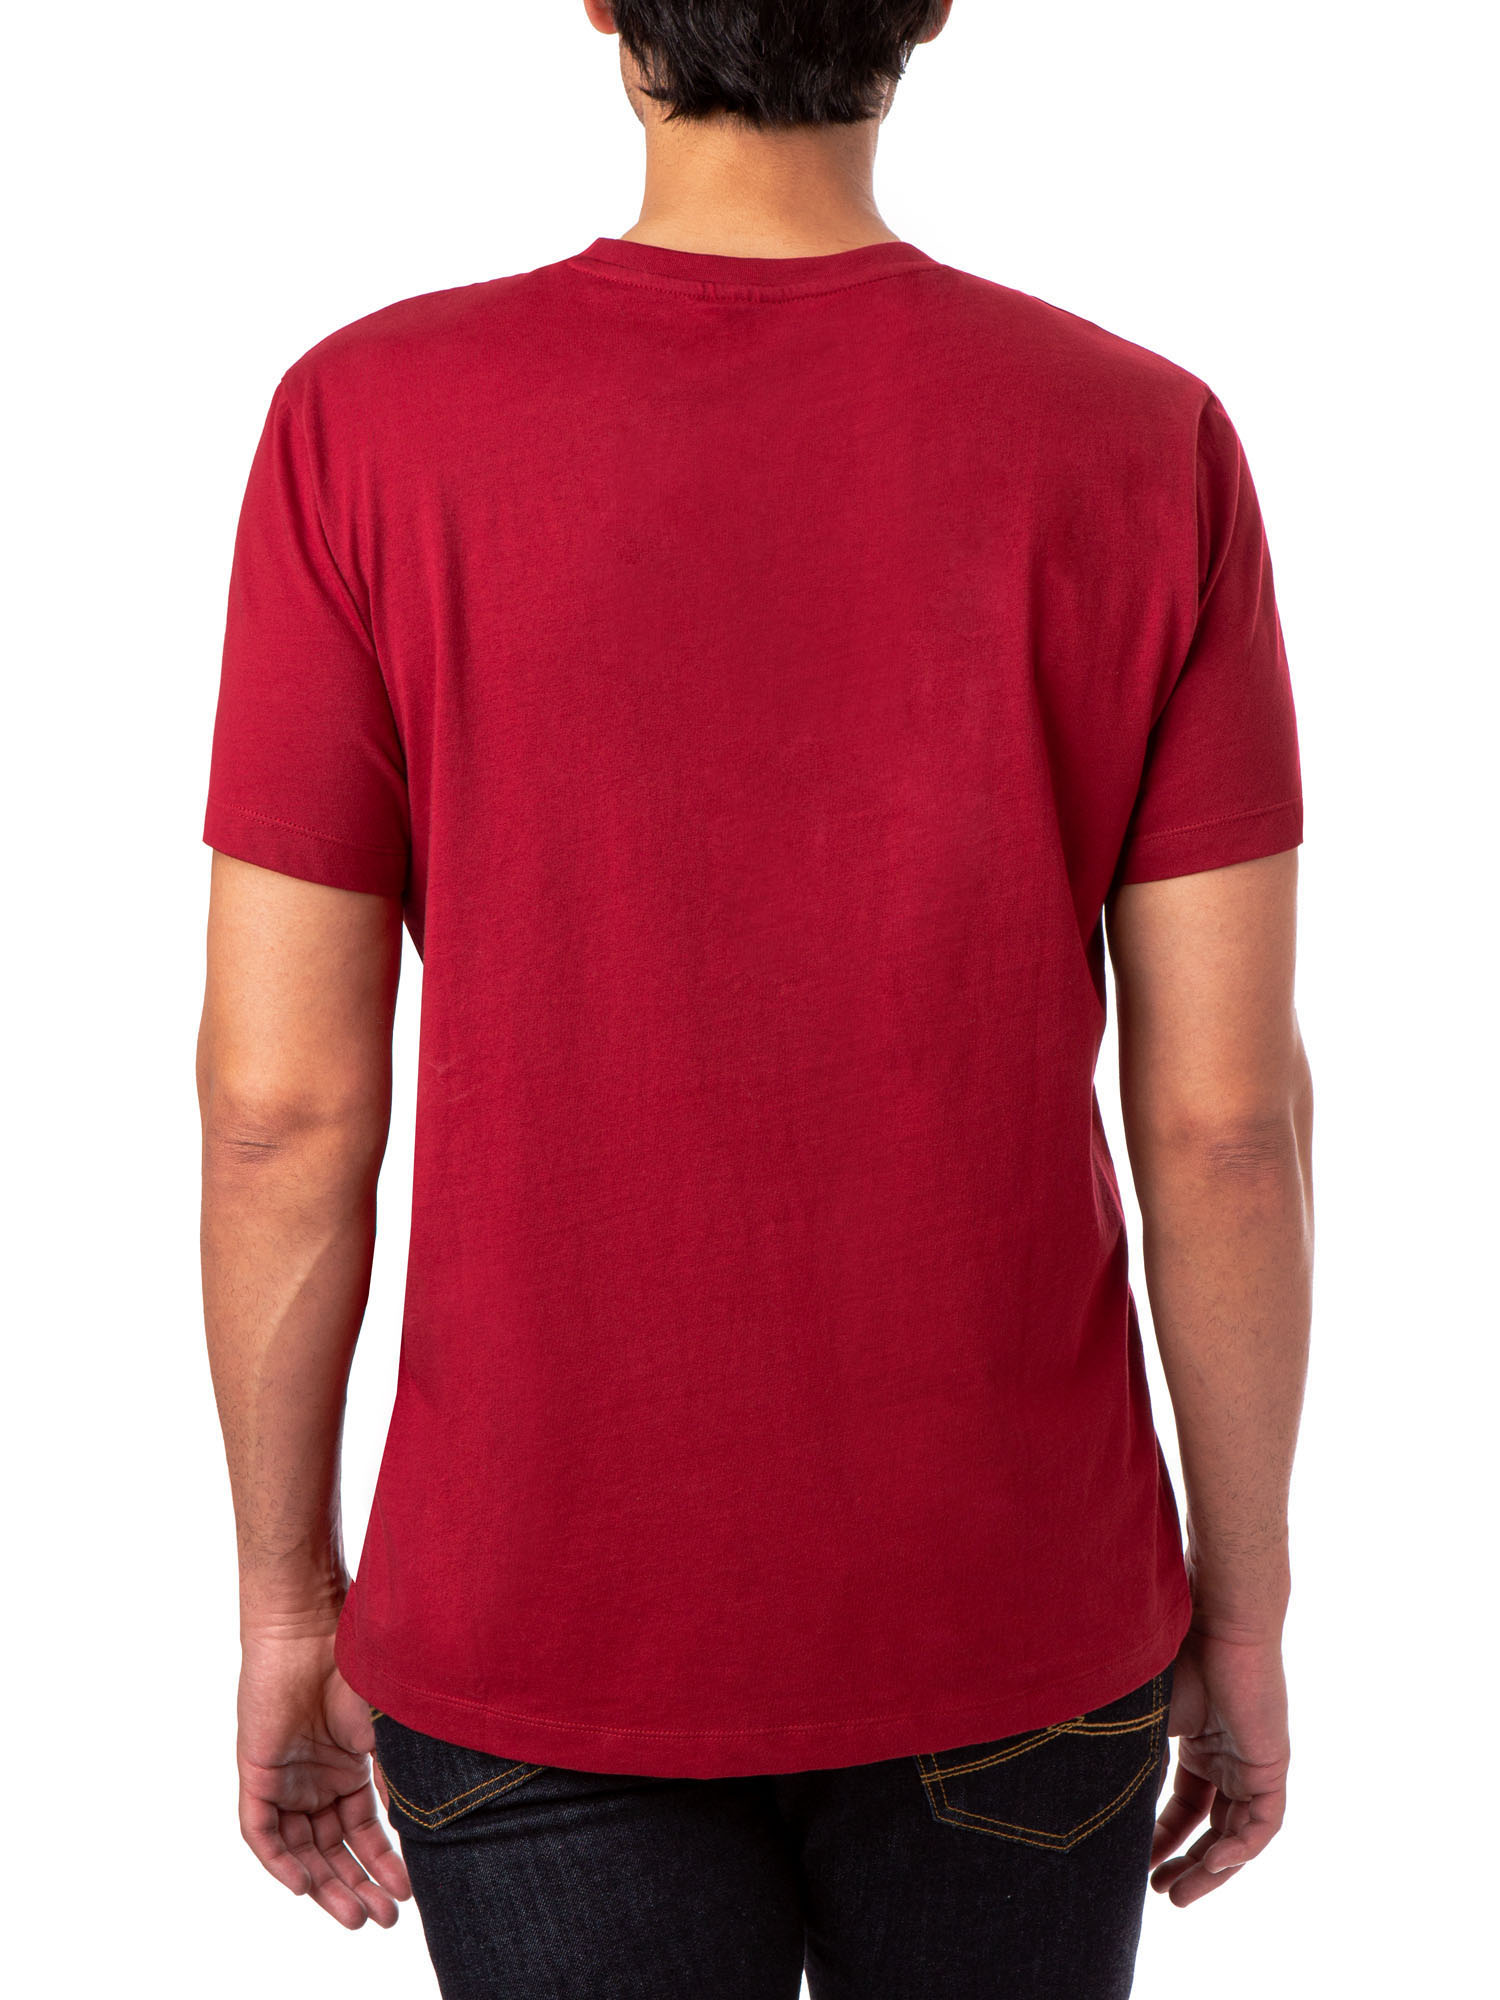 U.S. Polo Assn. Men's Pocket T-Shirt - image 3 of 3